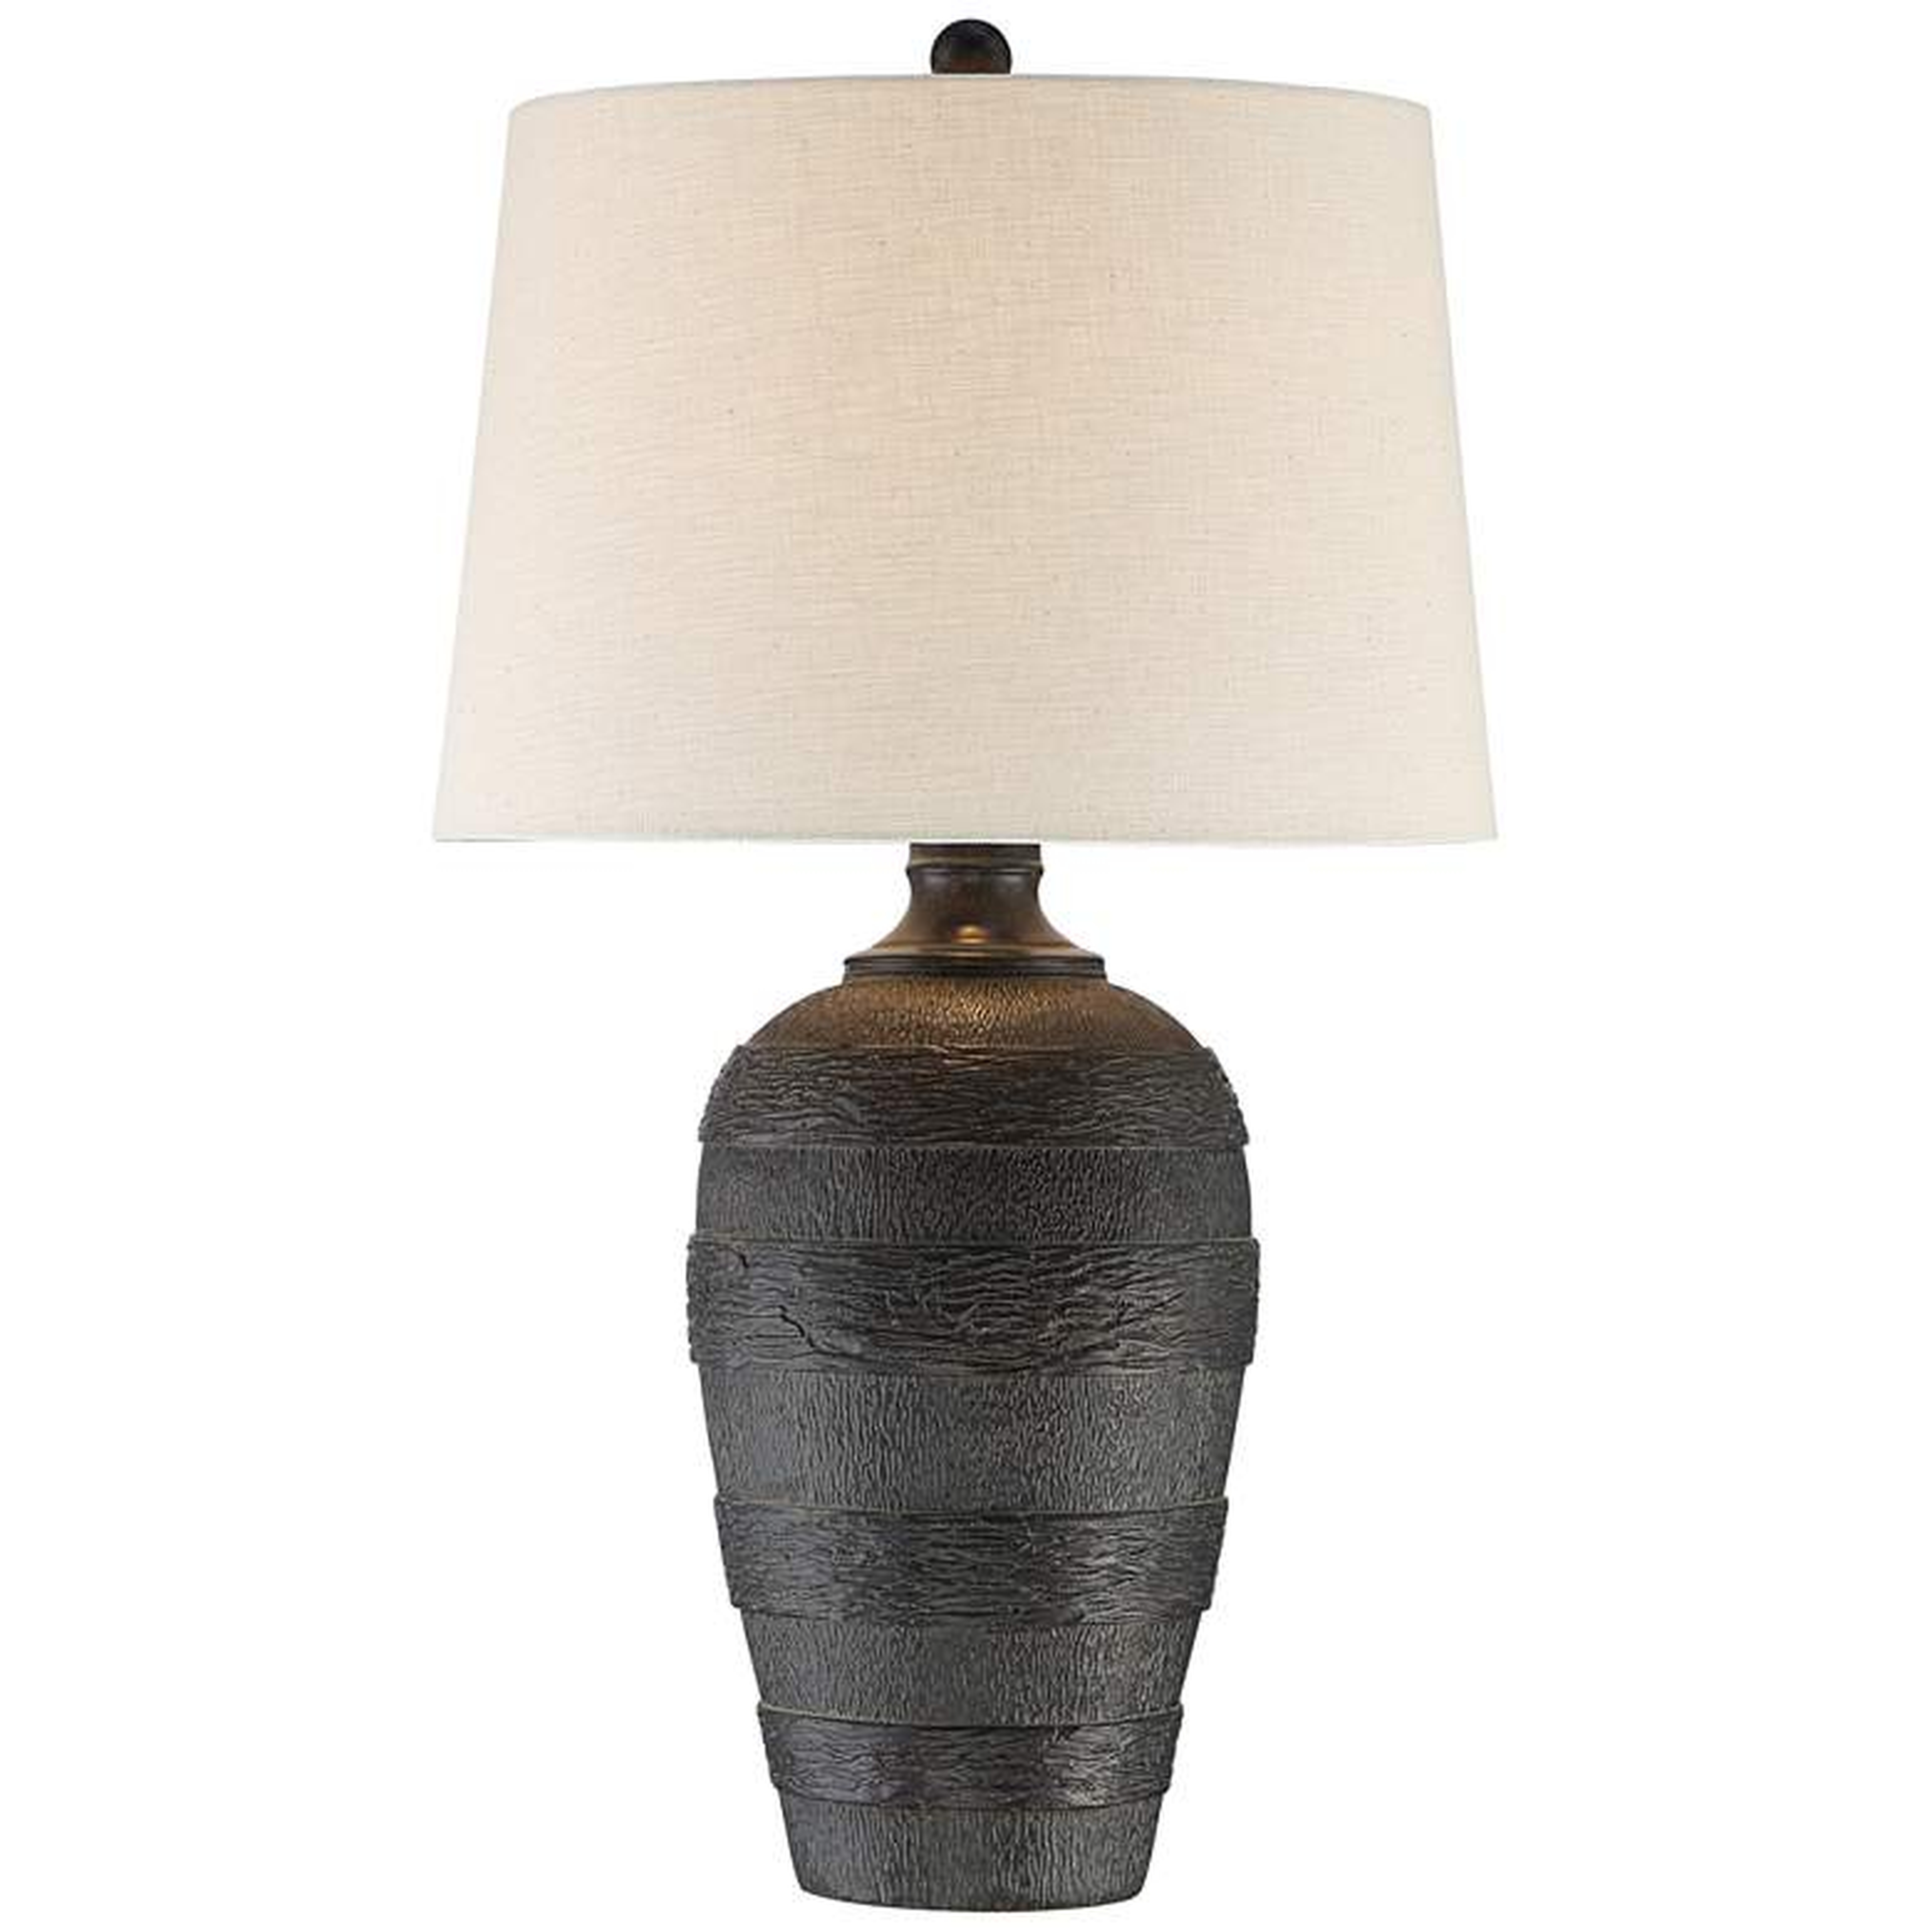 Coloma Resin Modern Rustic Table Lamp, Black - Lamps Plus